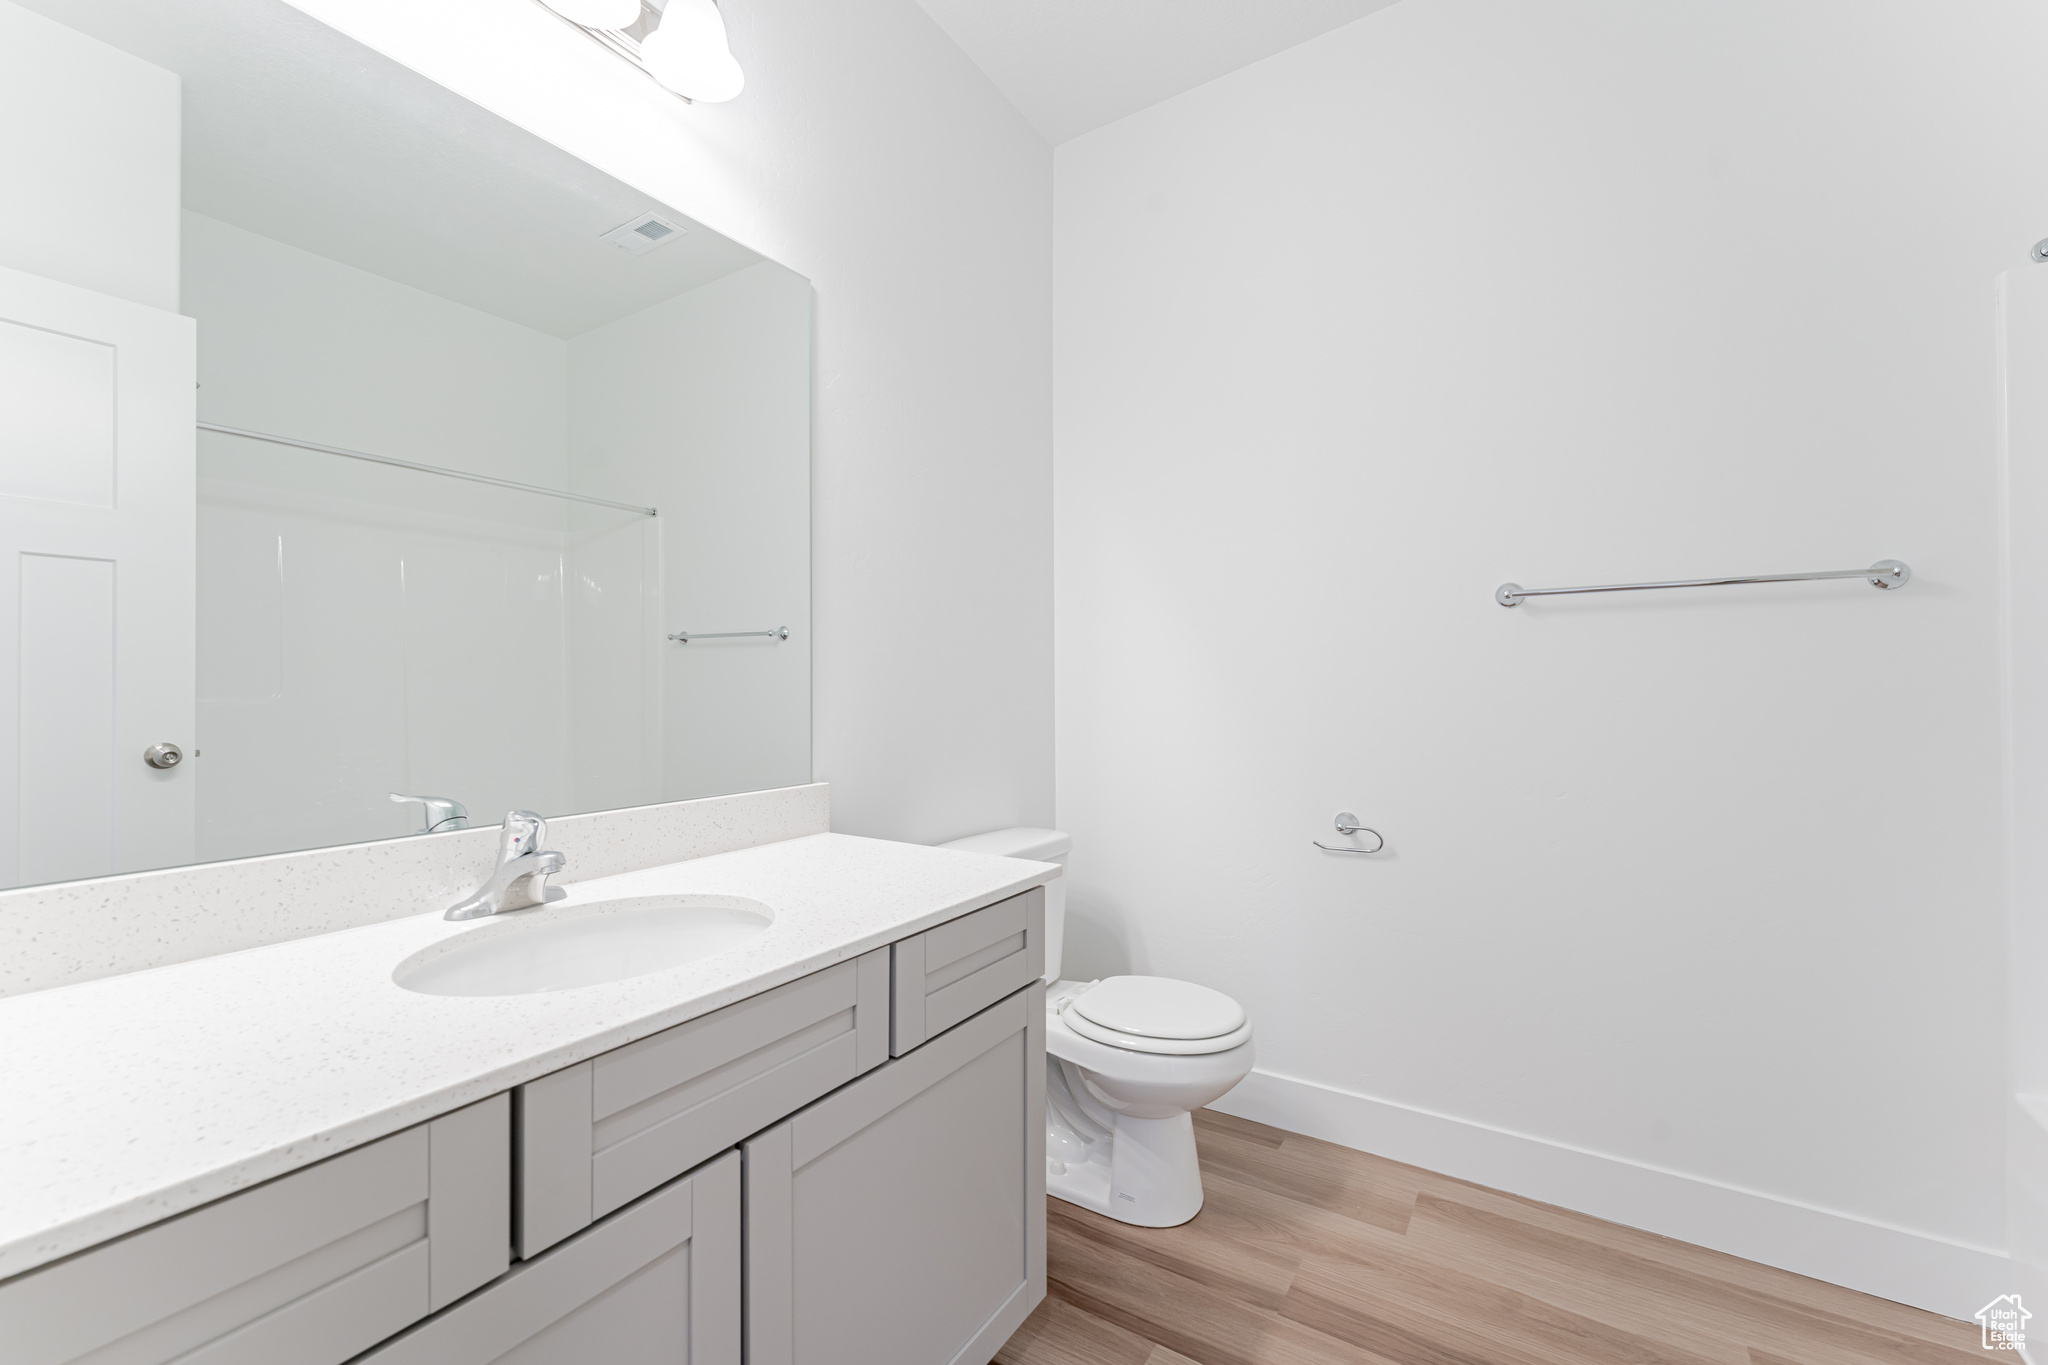 Bathroom featuring oversized vanity, wood-type flooring, and toilet